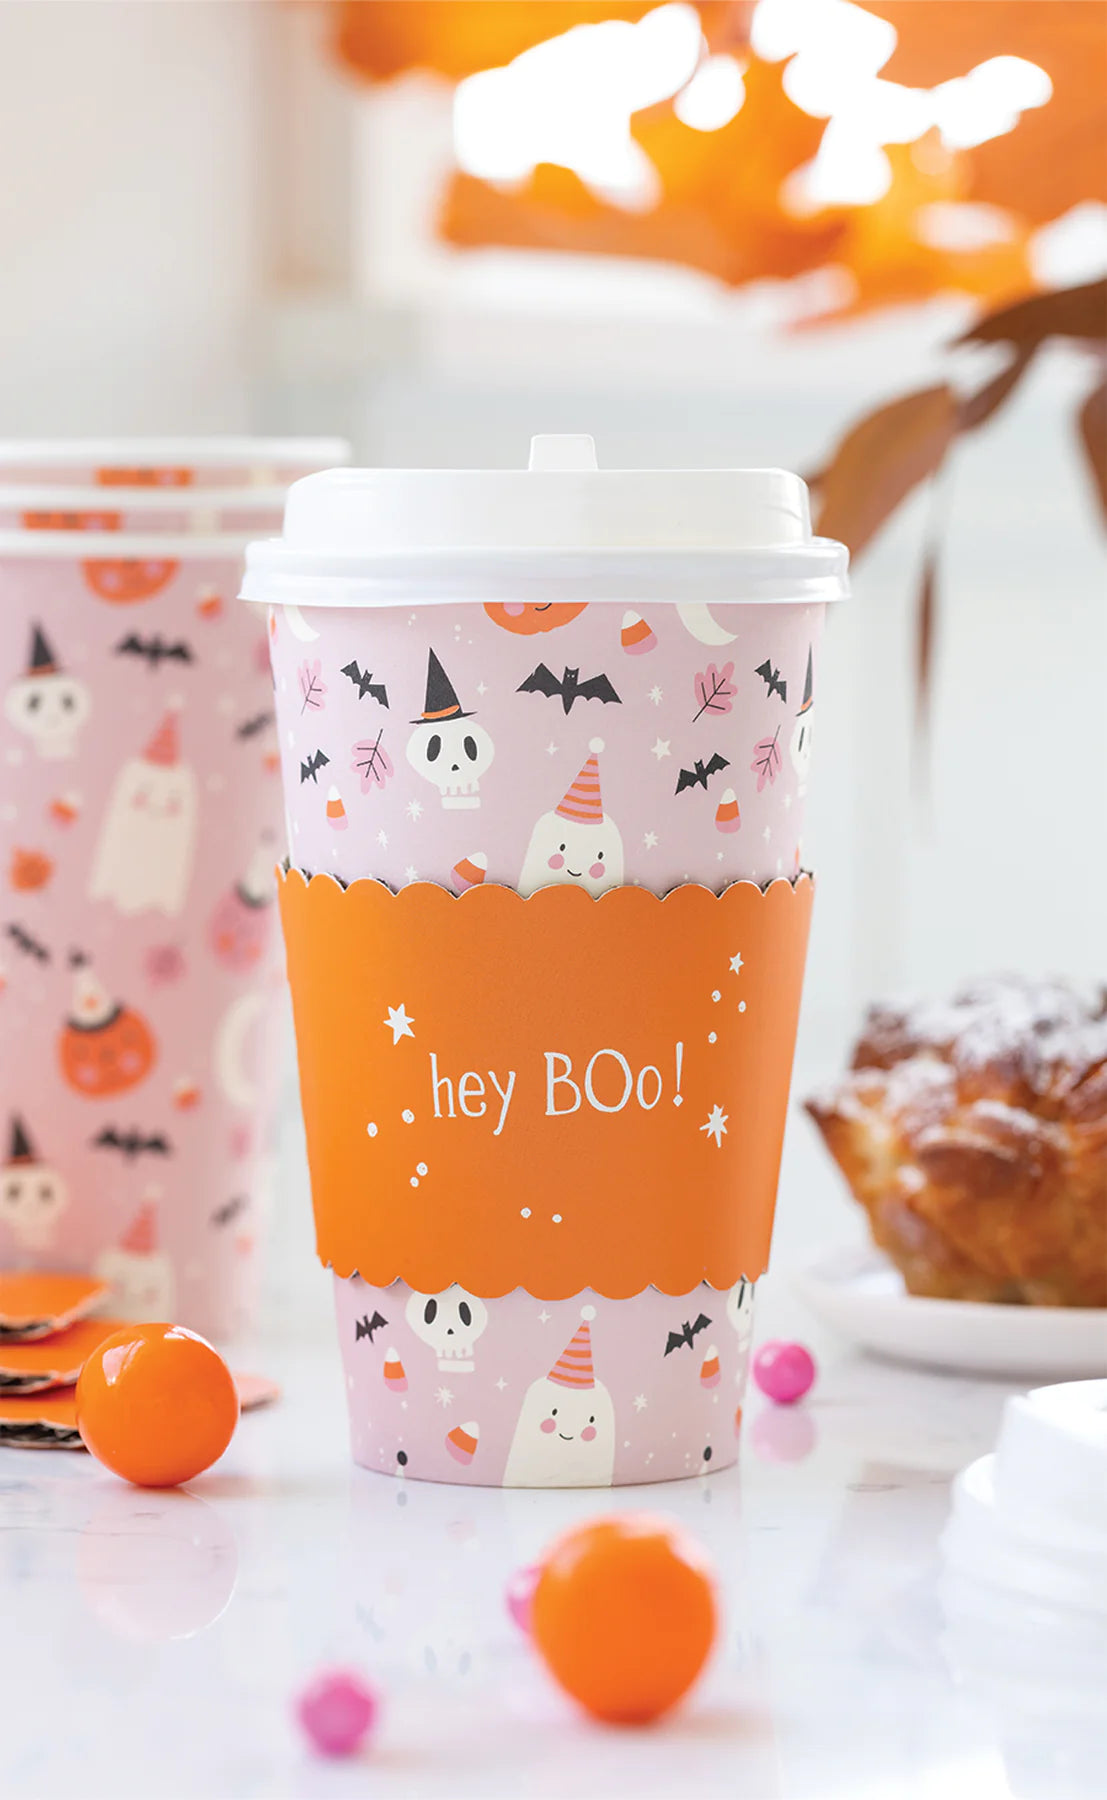 Pink Halloween Ghoul Gang Coffee Cups & Lids 8ct